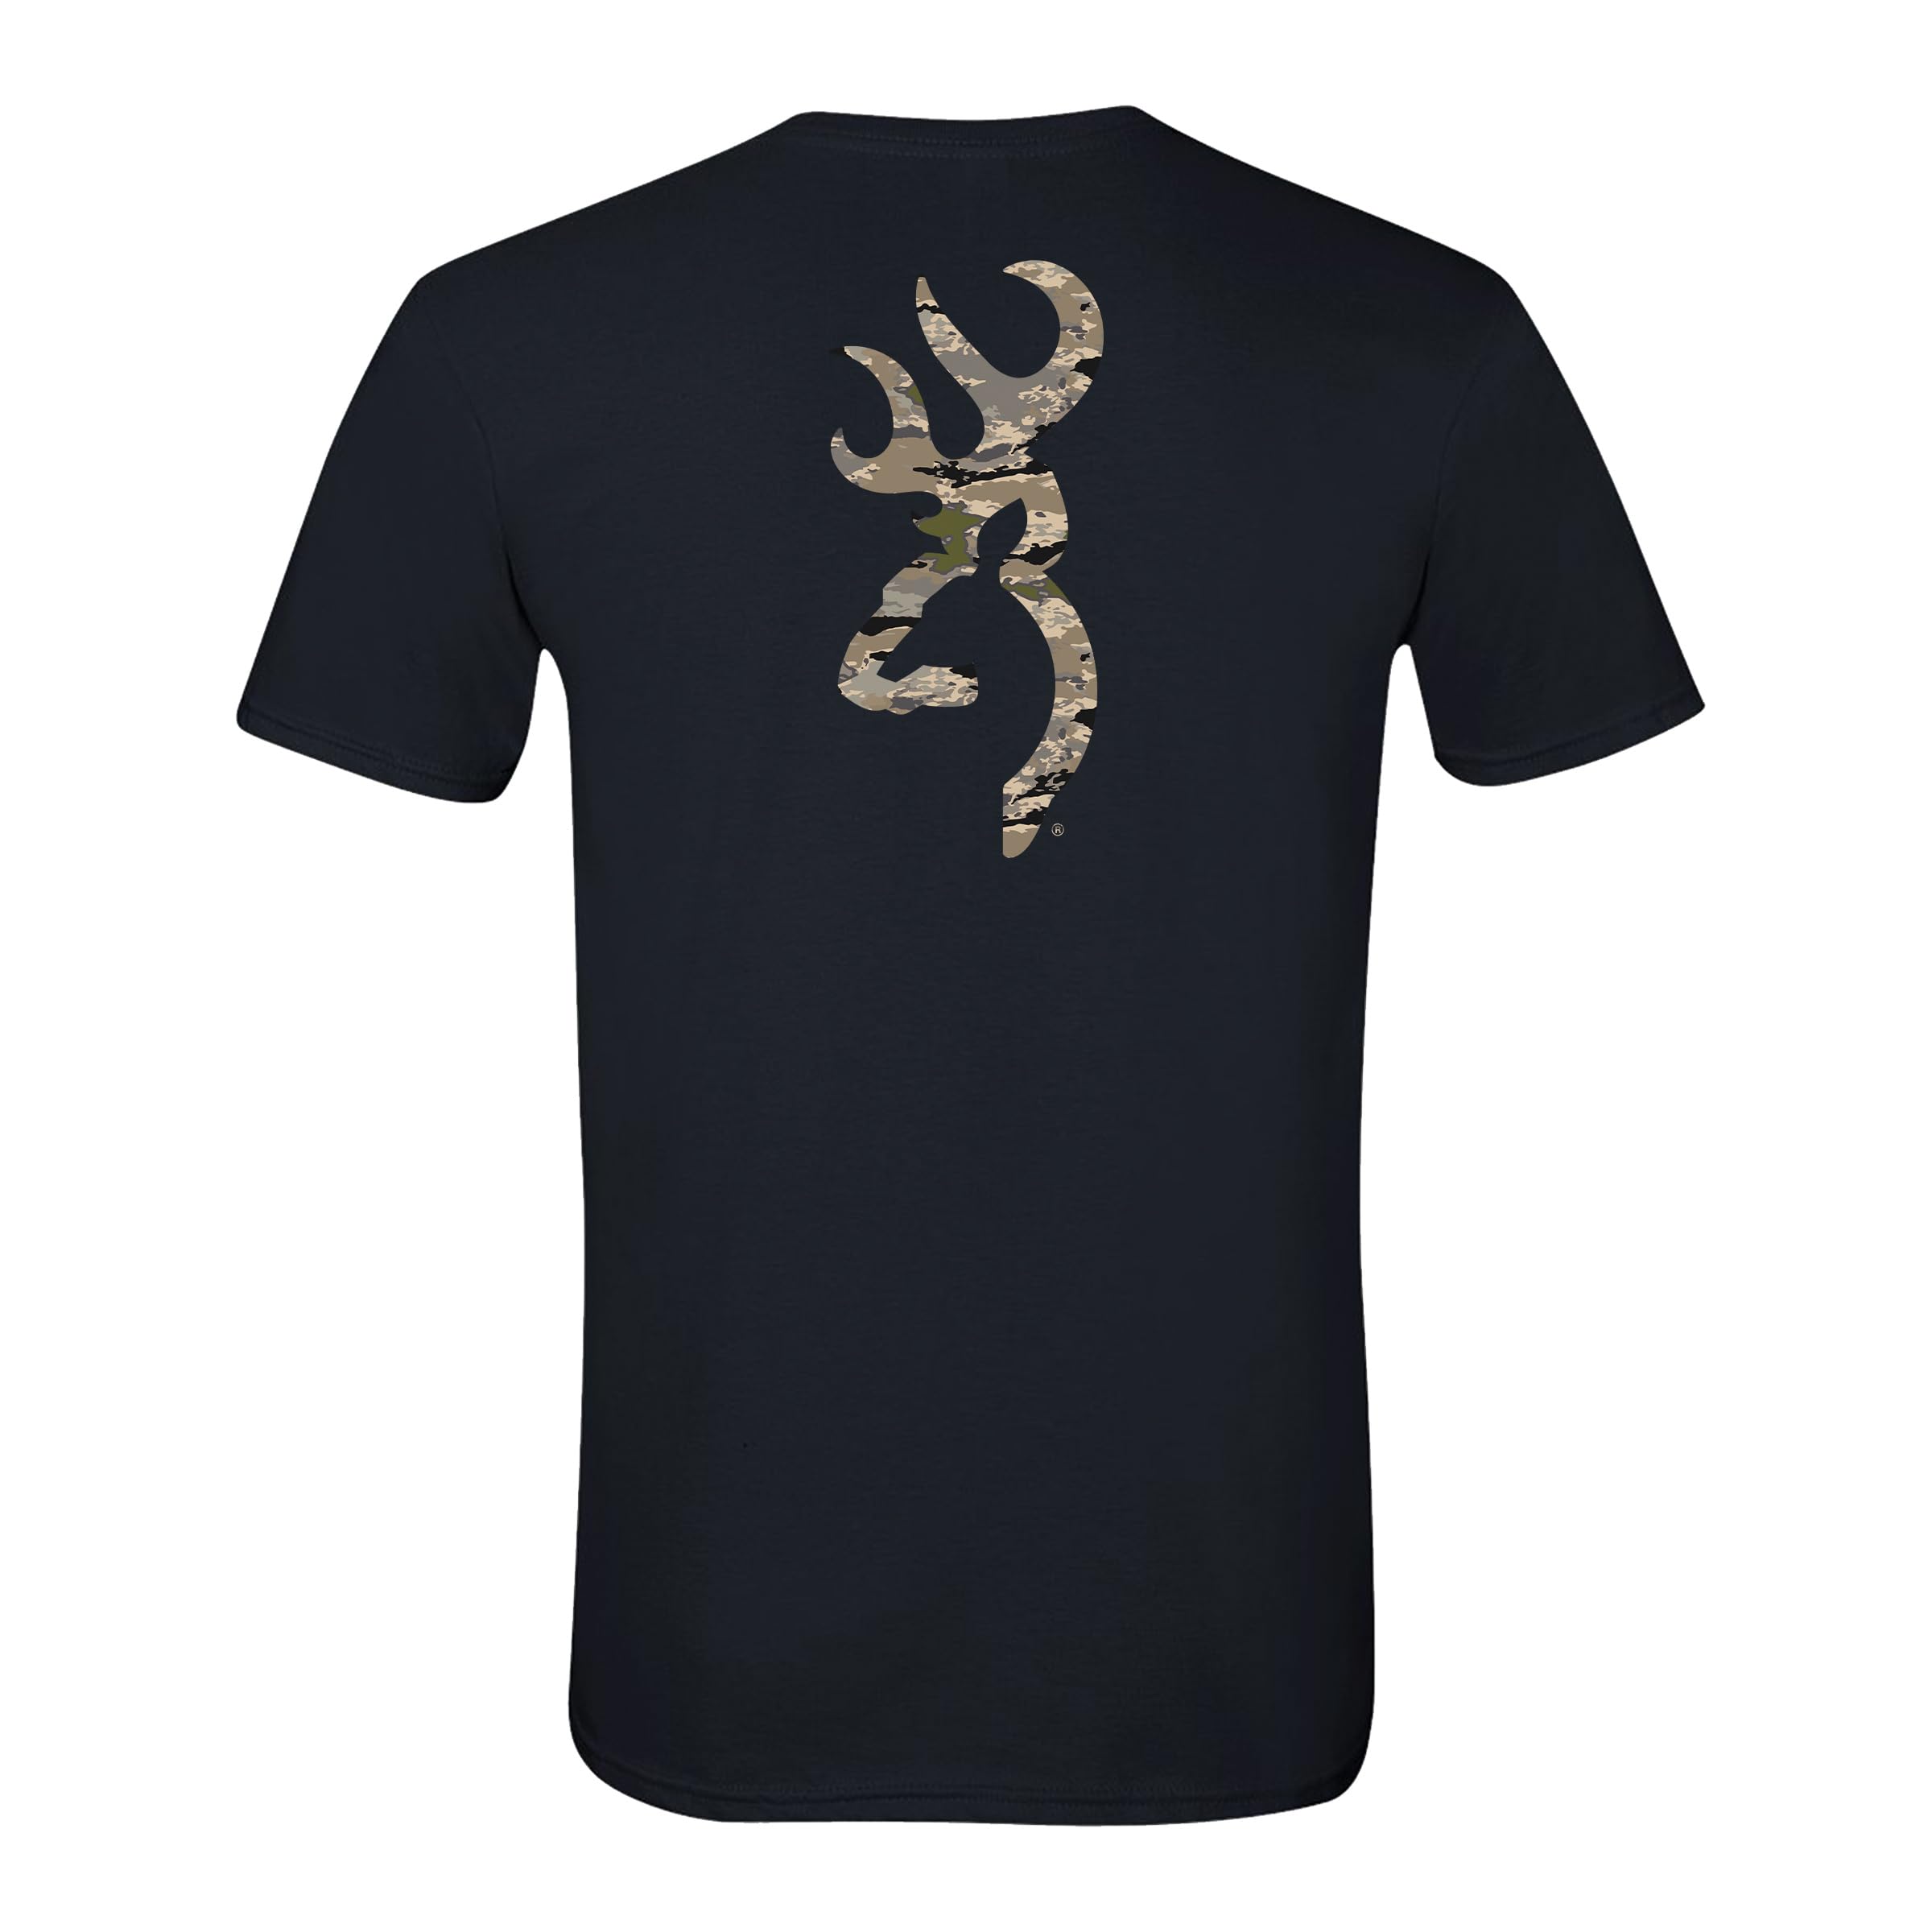 Browning Men's Standard T-Shirt, Hunting & Outdoors Short Sleeve Graphic Tees, Ovix Camo Buckmark (Black)